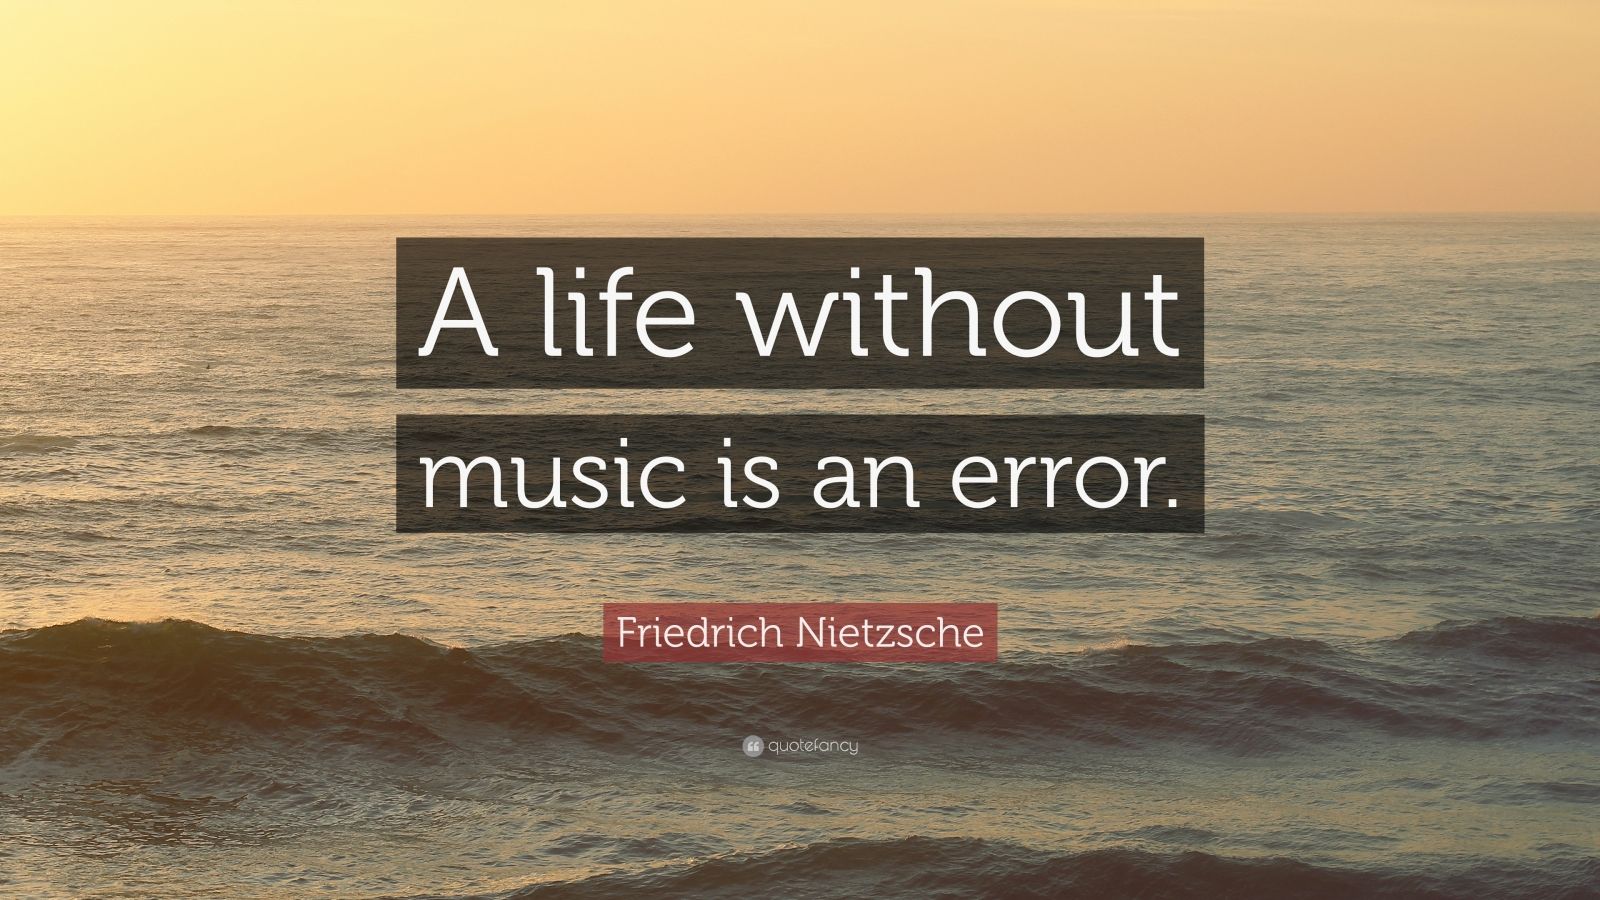 Friedrich Nietzsche Quote: “A life without music is an error.” (7